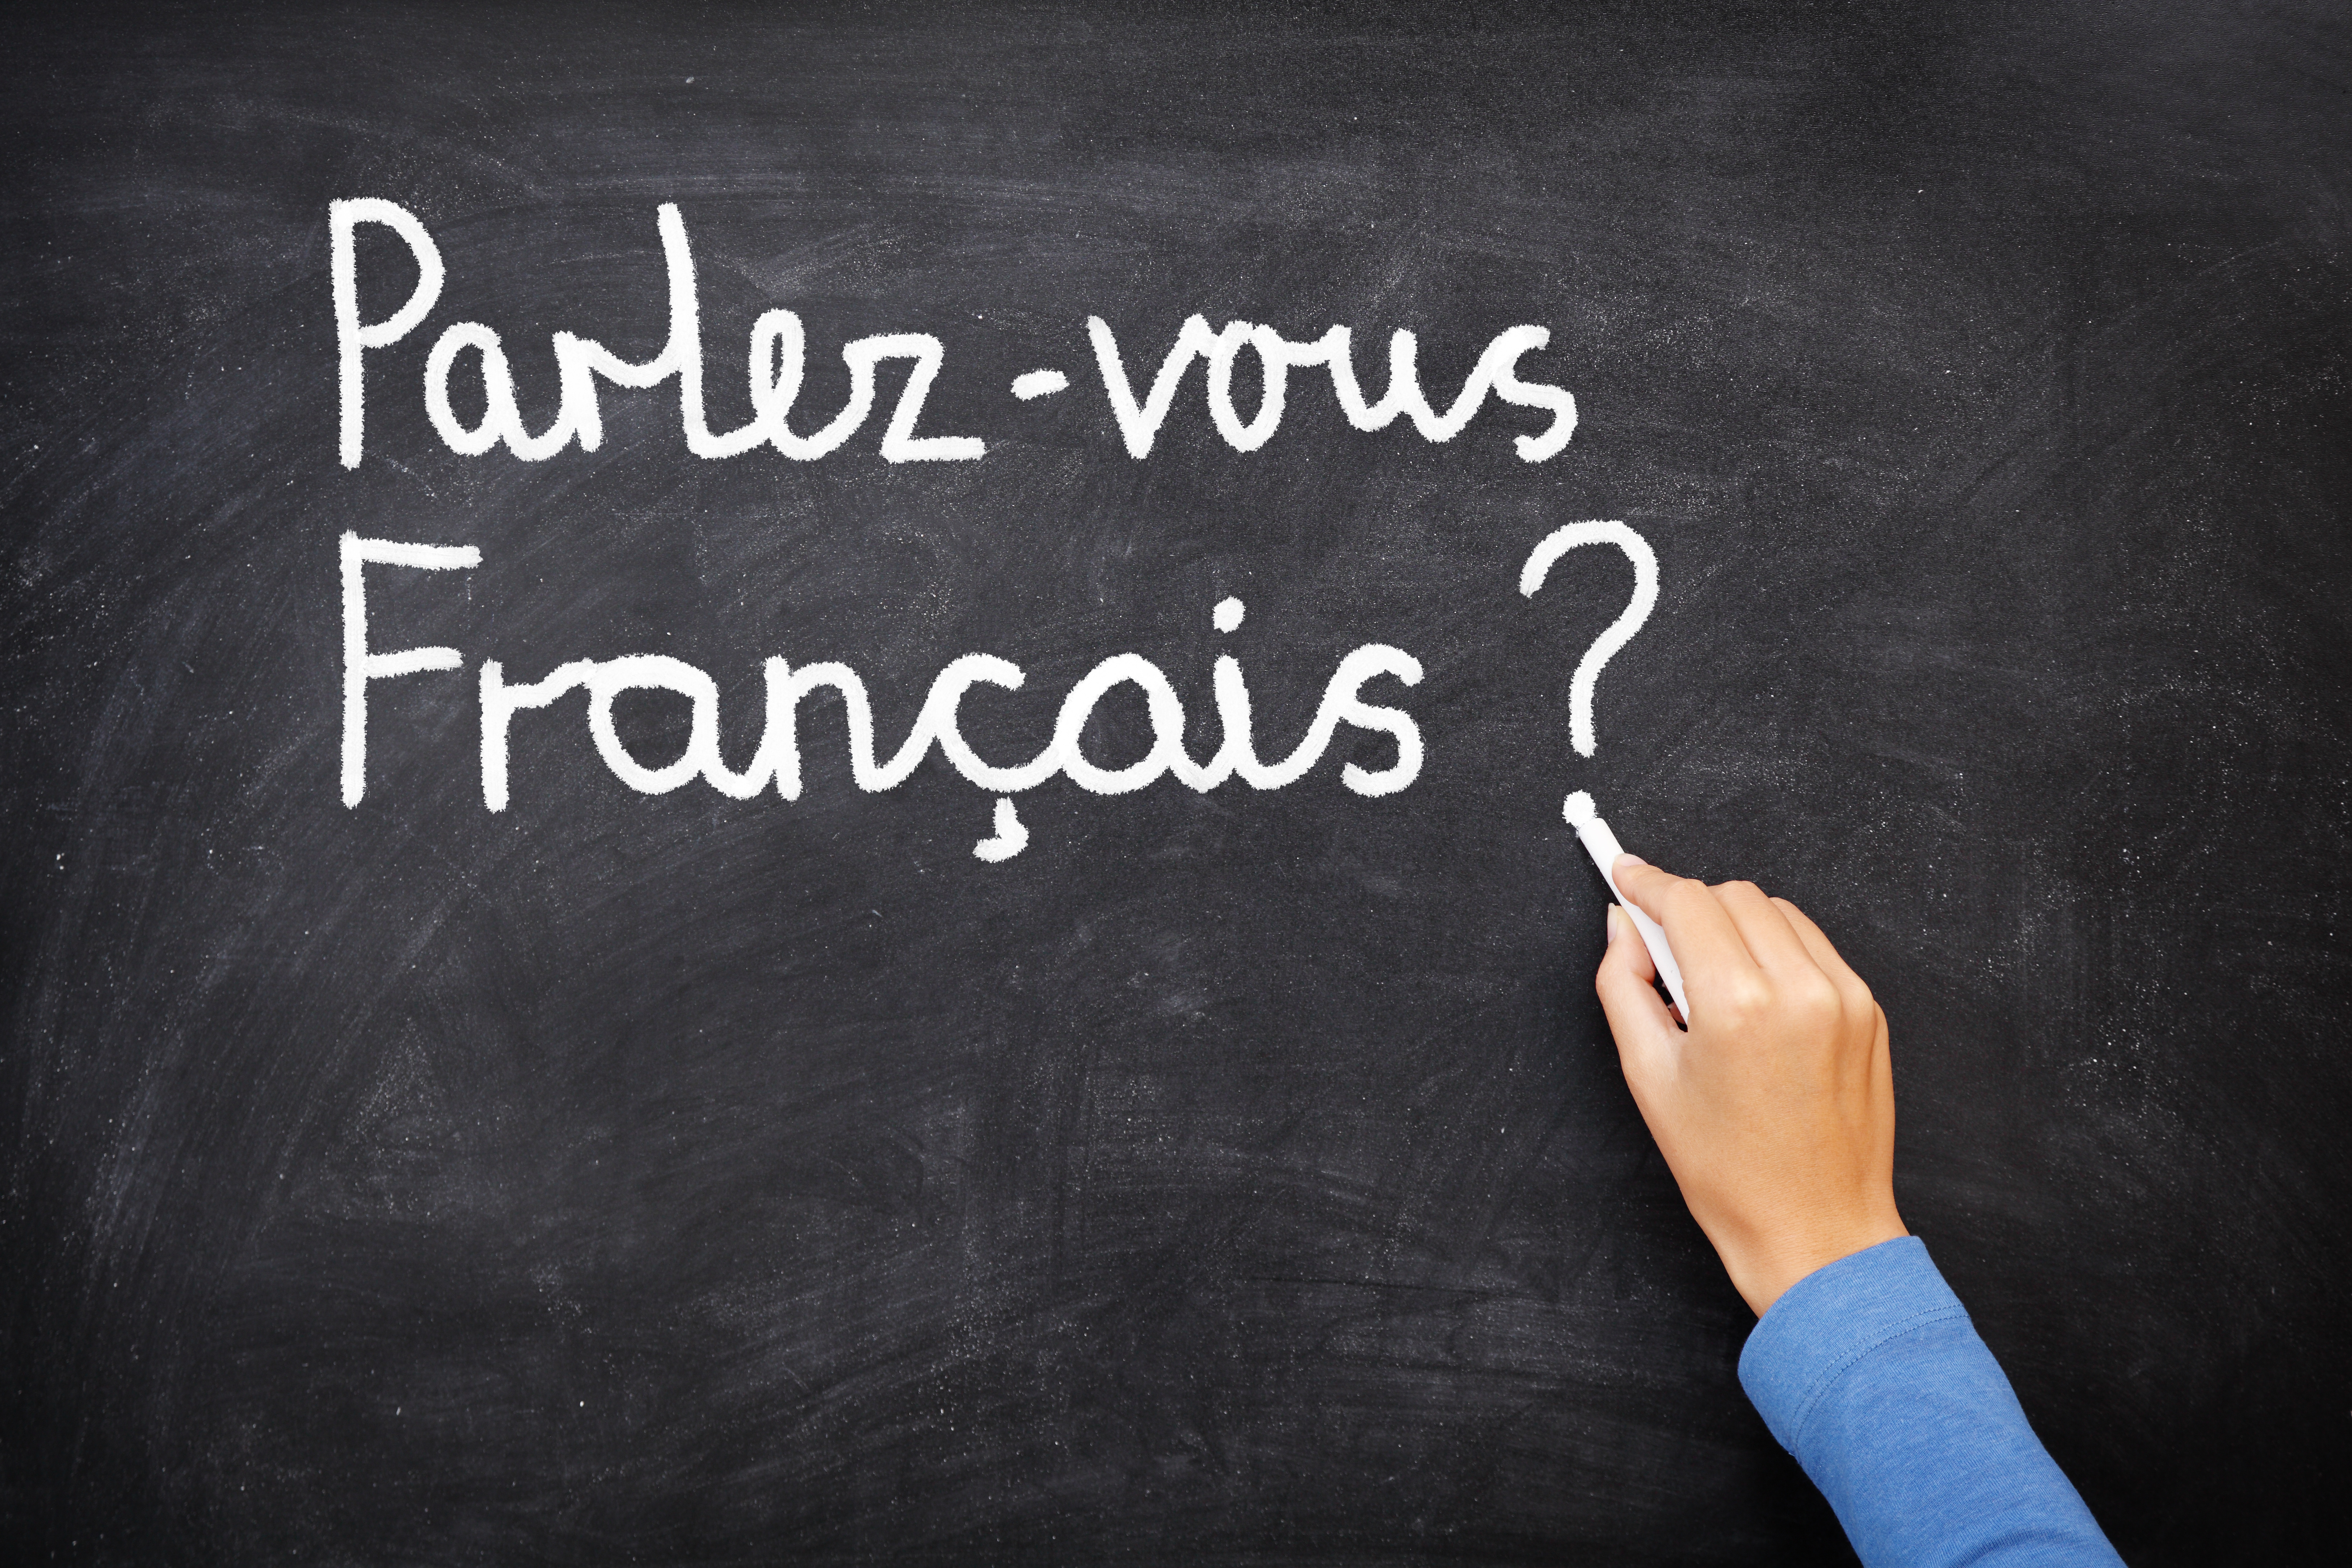 Французский вслух. Французский язык. Изучение французского языка. Урок французского языка. Изучать французский язык.